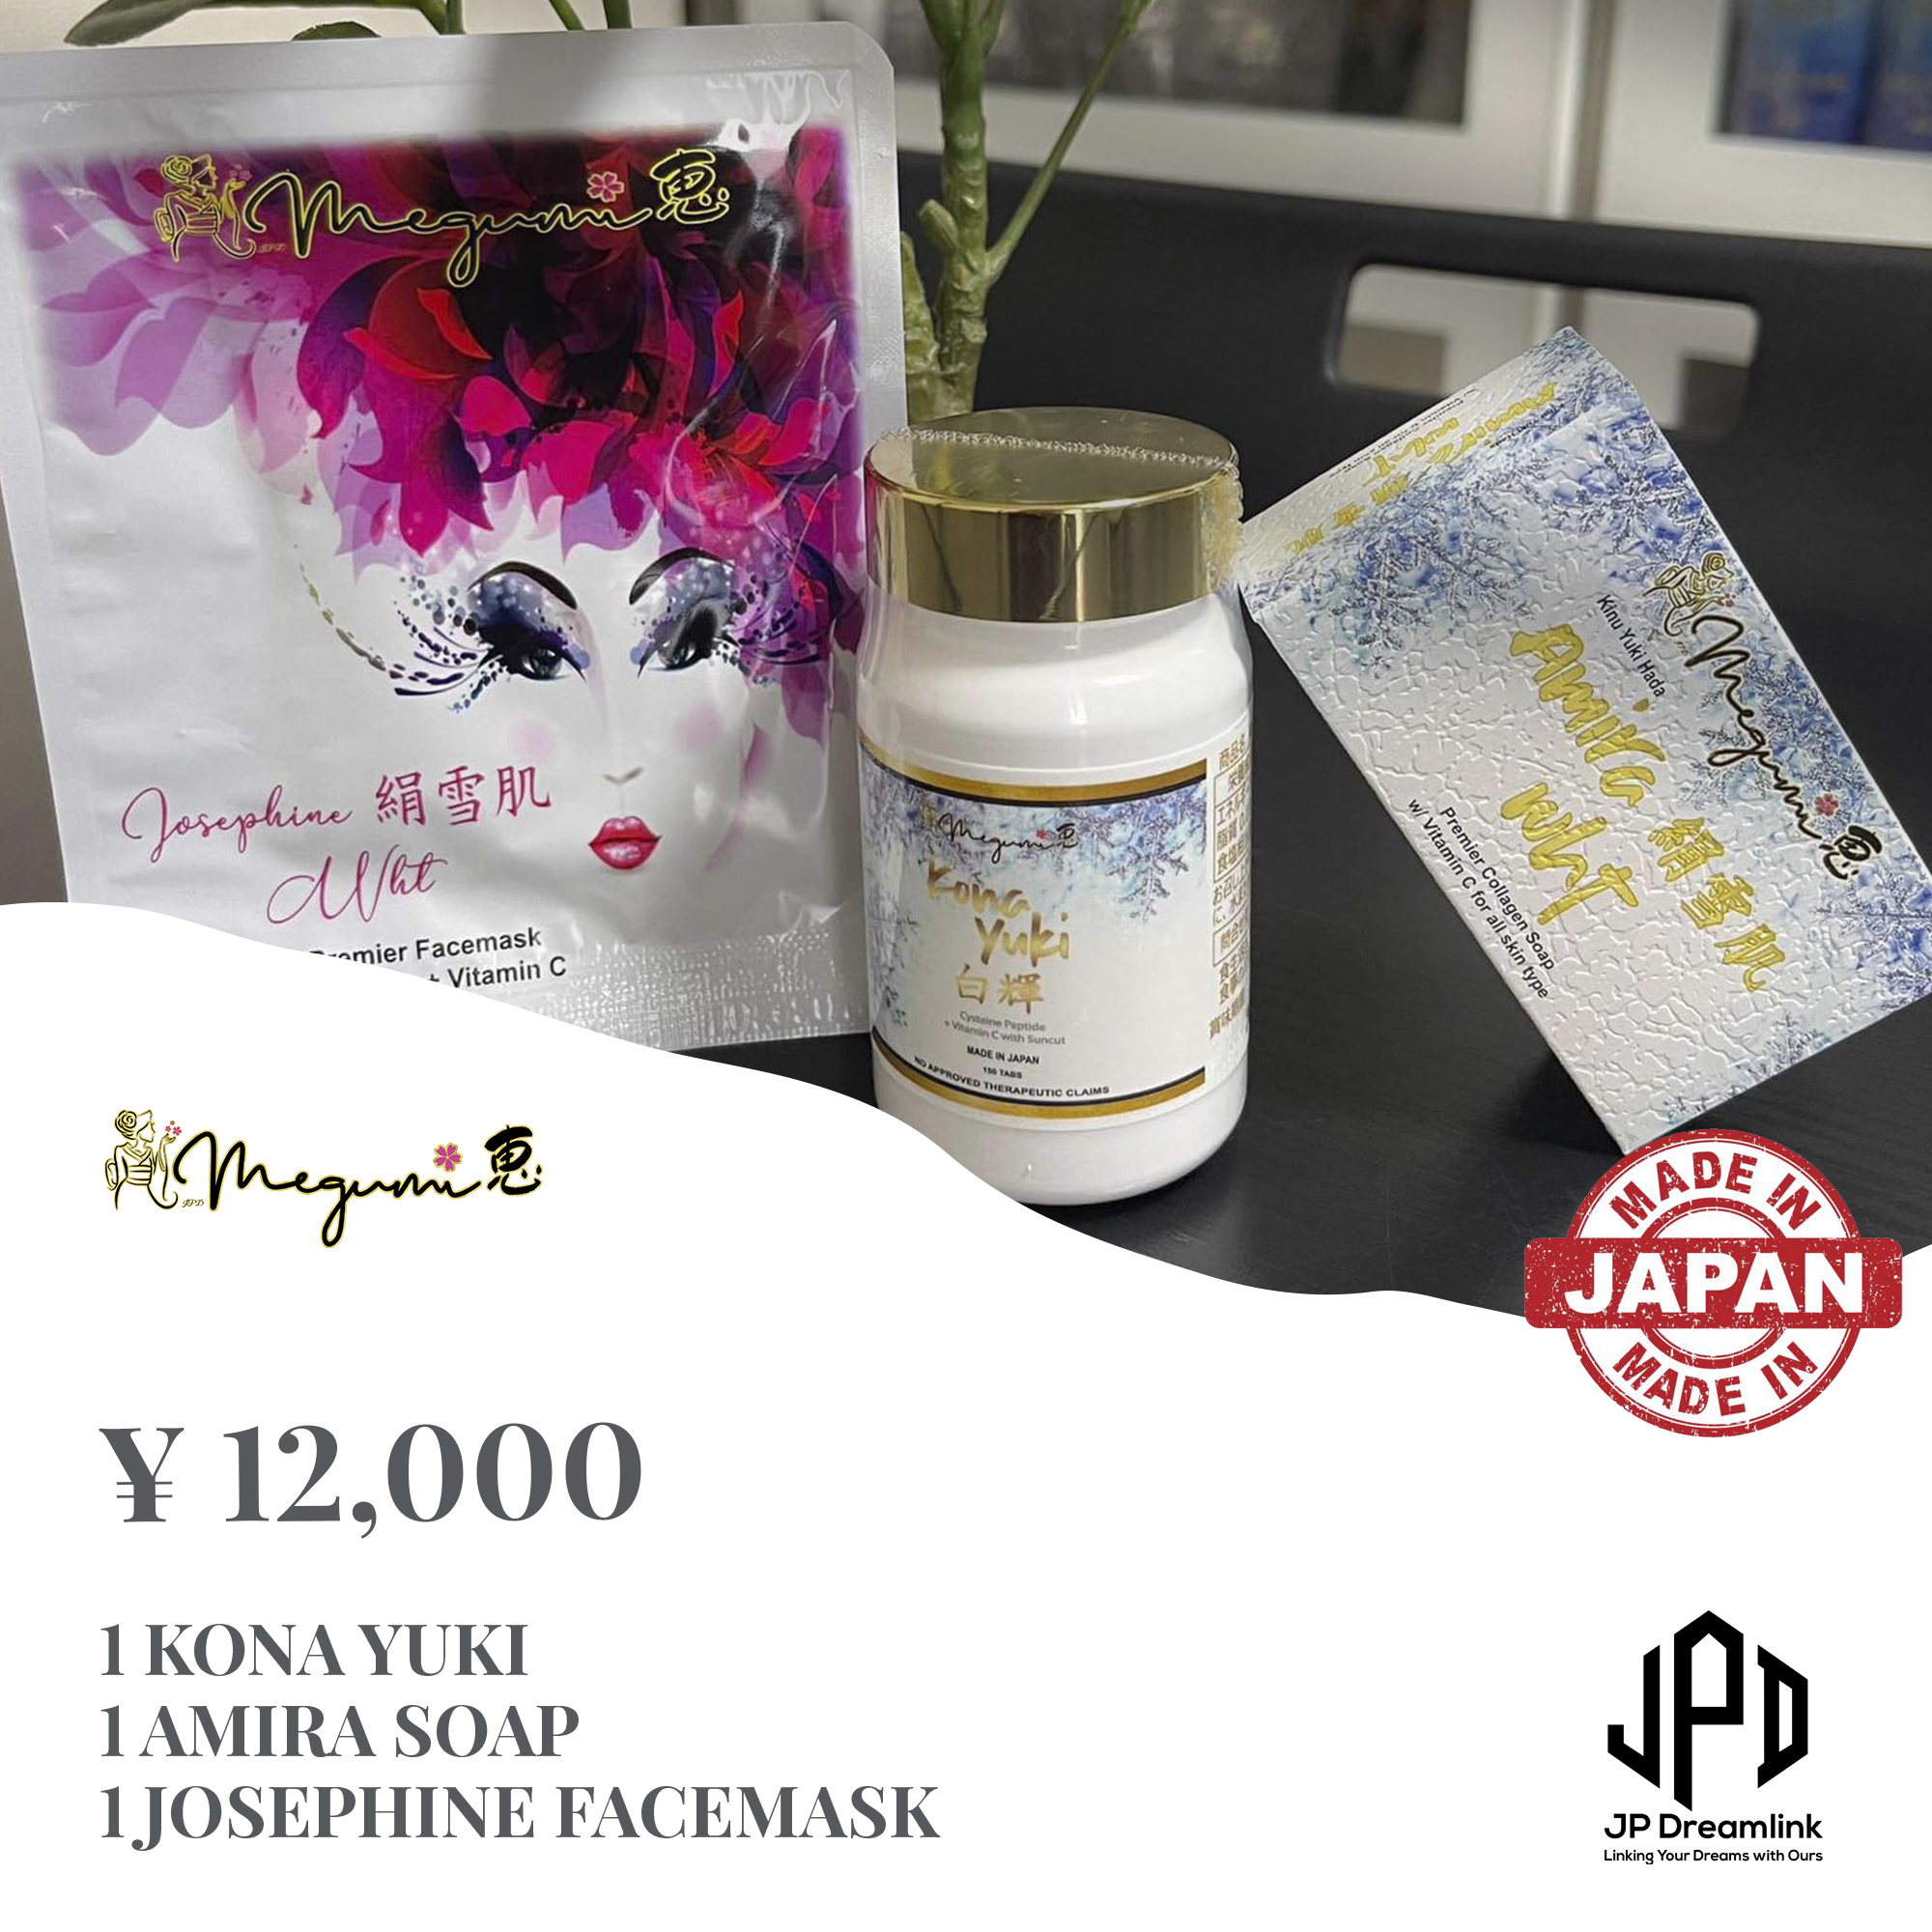 1 Kona Yuki/1 Amira Soap/1 Josephine Facemask